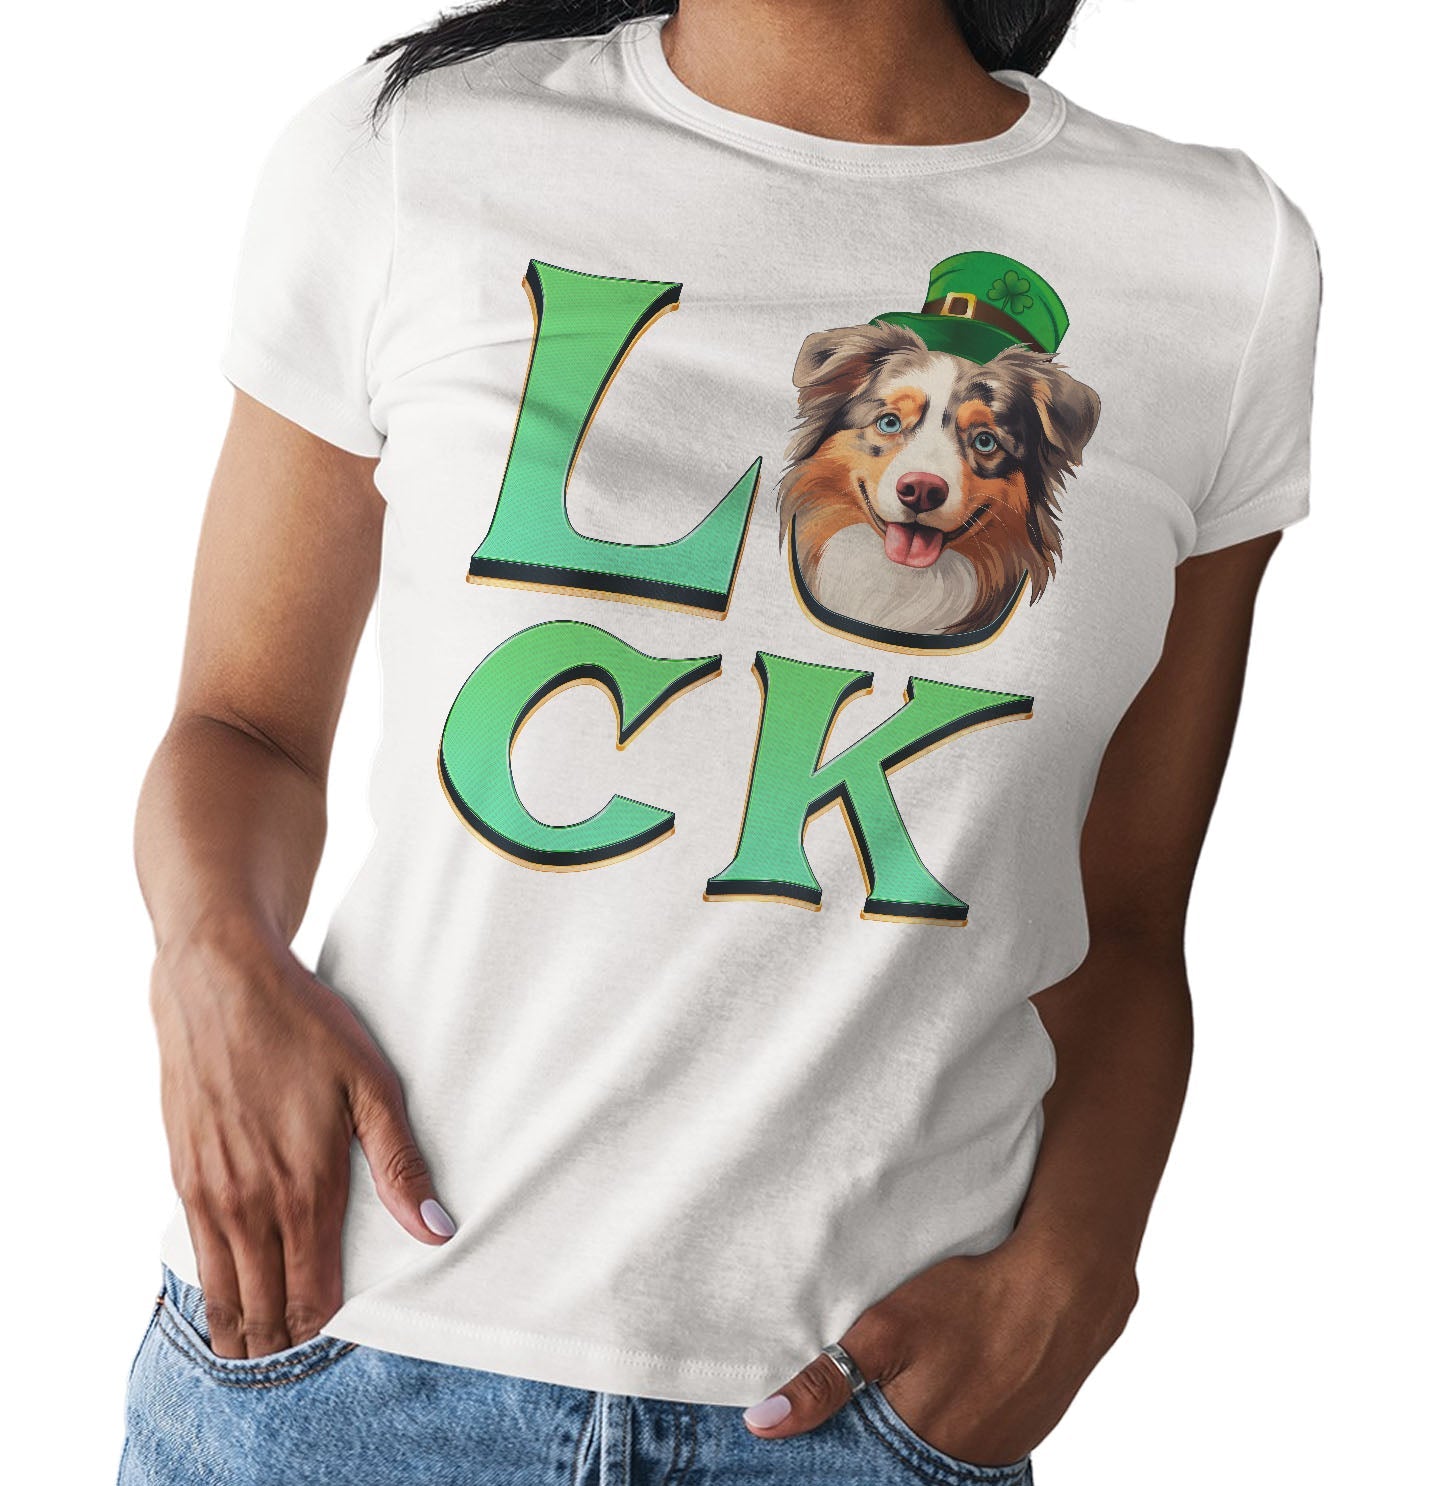 Big LUCK St. Patrick's Day Australian Shepherd - Women's Fitted T-Shirt